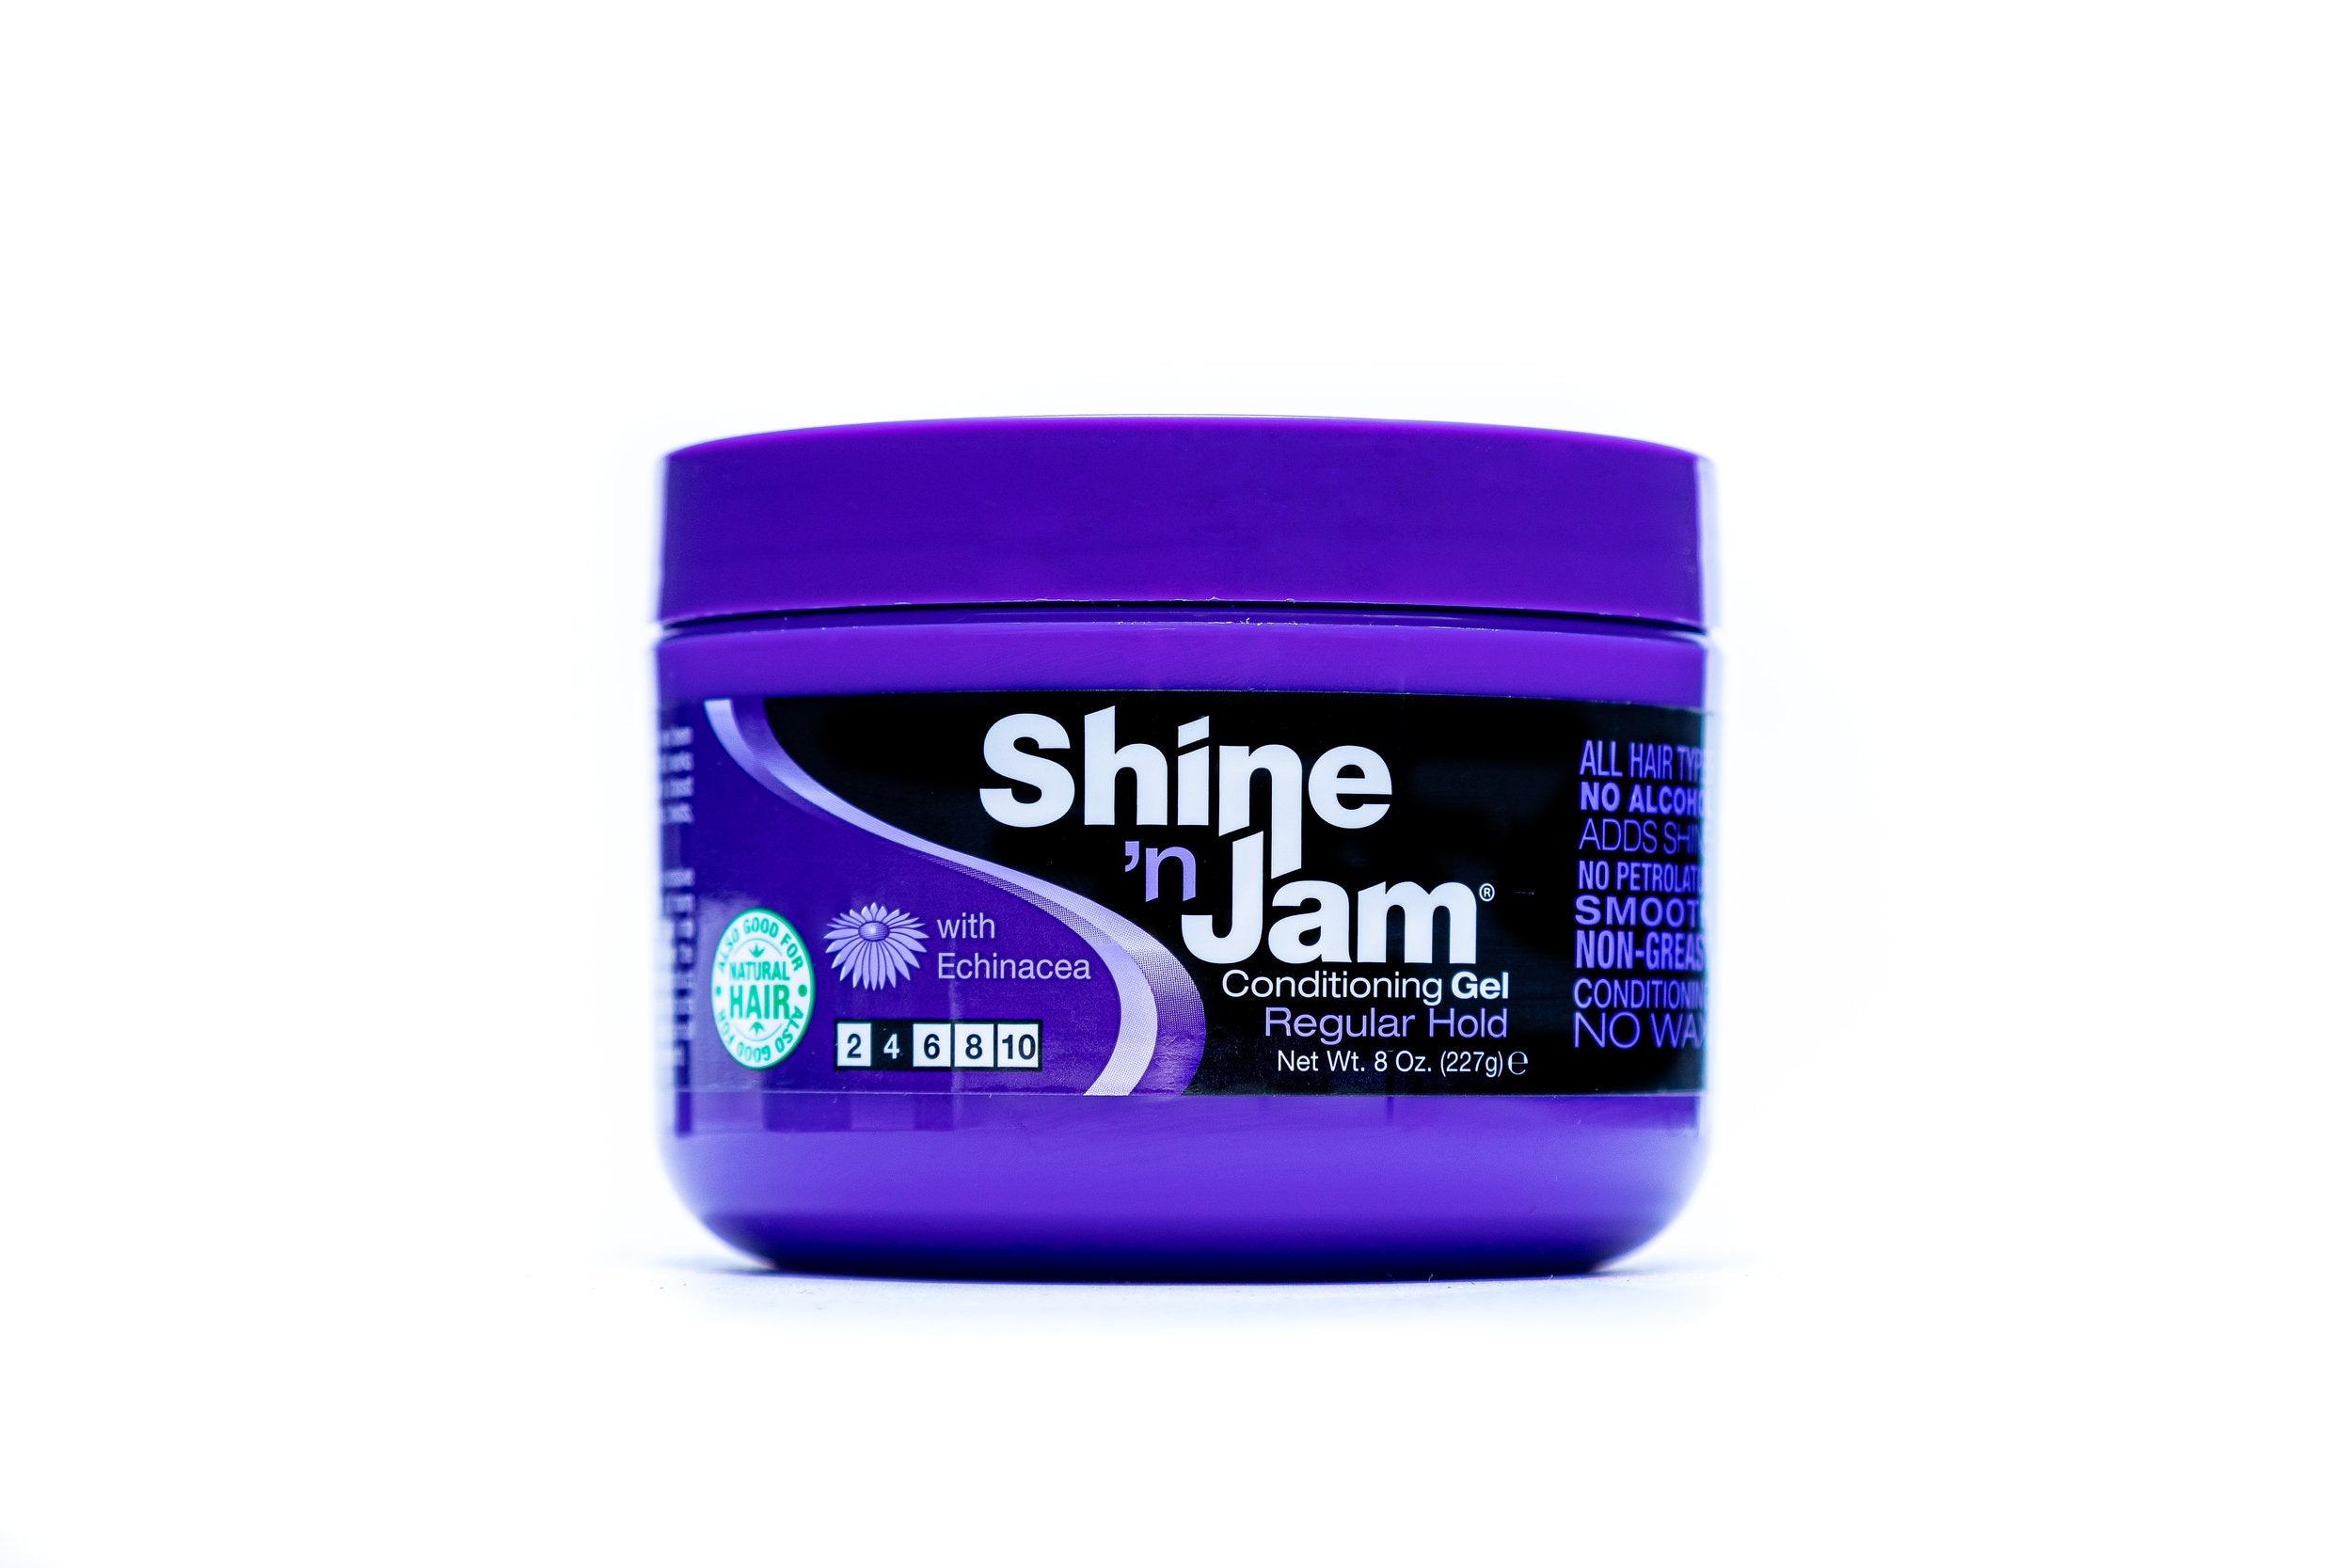 Ampro Shine 'N Jam Conditioning Gel Regular Hold, 8 Oz (AM41071)